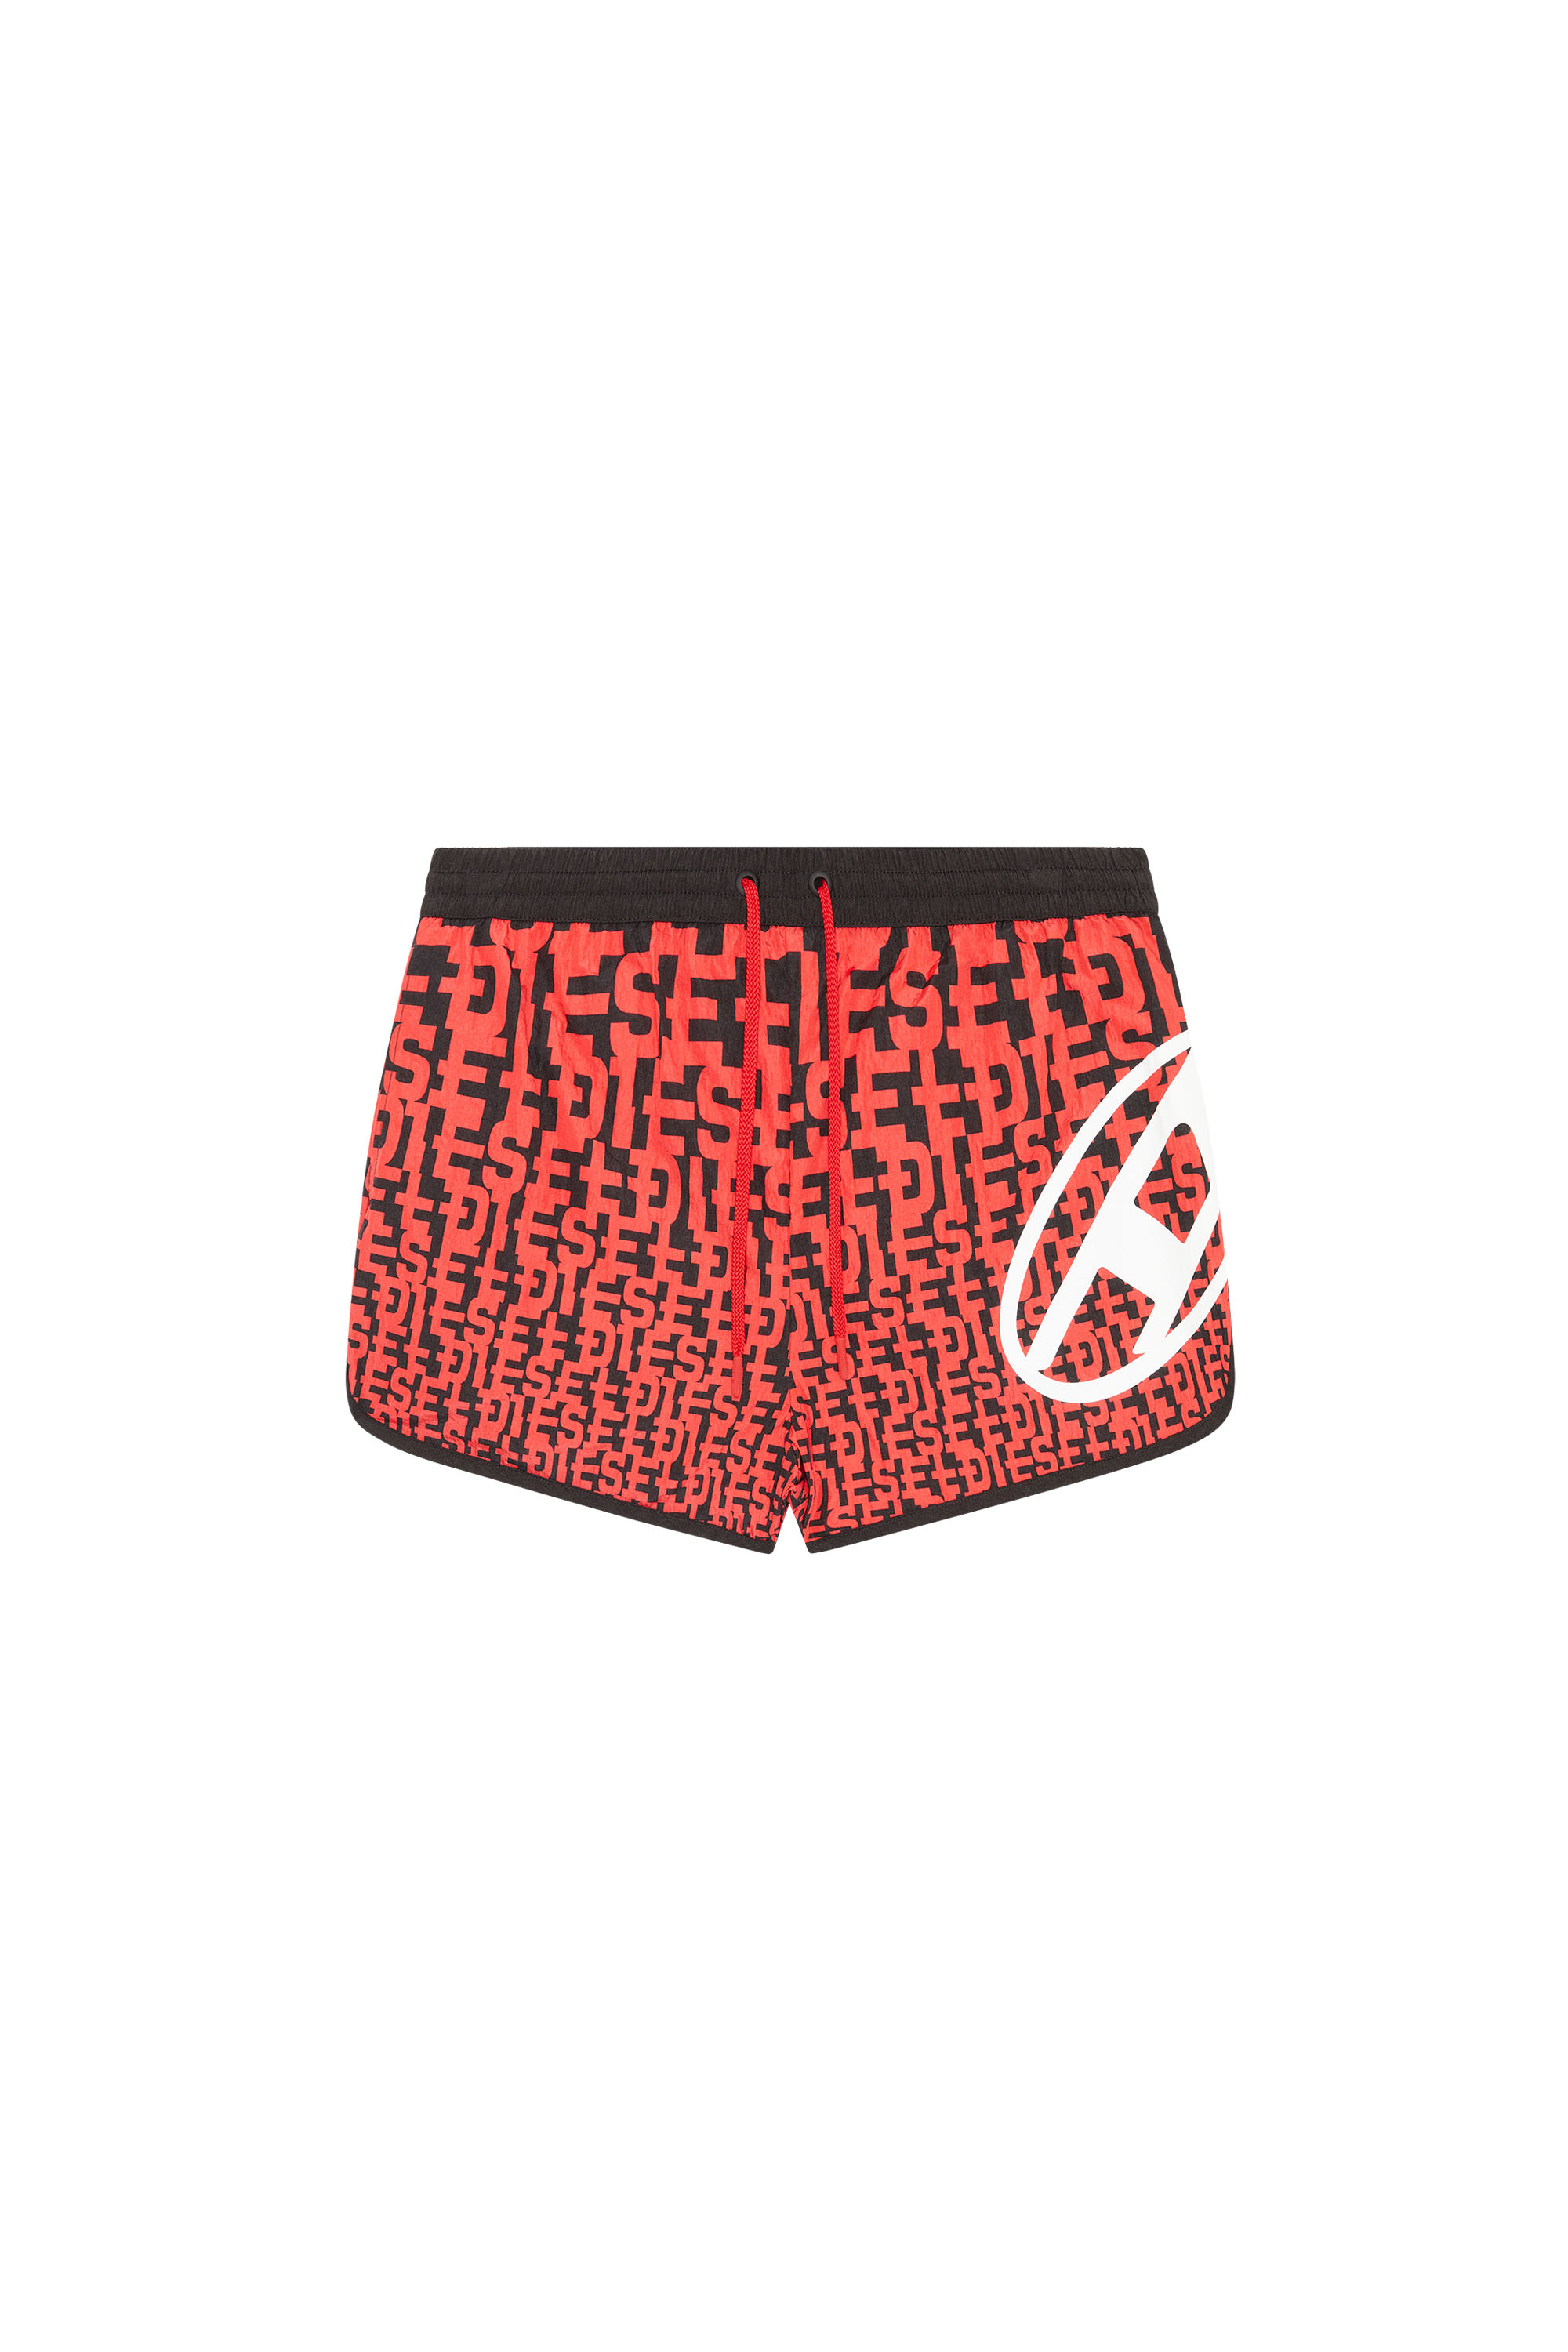 BMBX-JESPER, Black/Red - Swim shorts